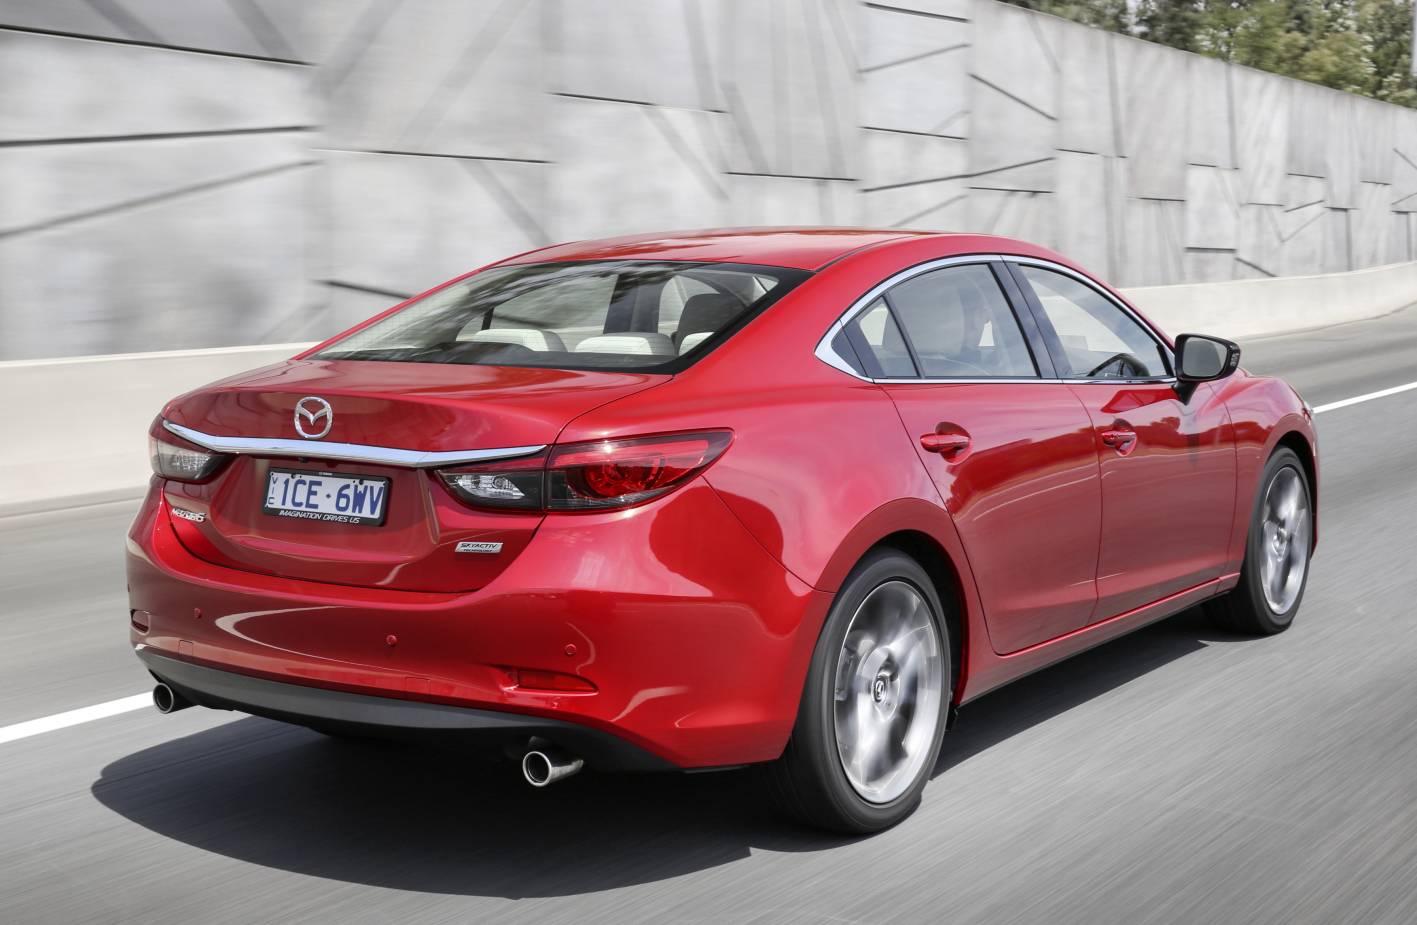 2015 Mazda6 update on sale in Australia from 32,540